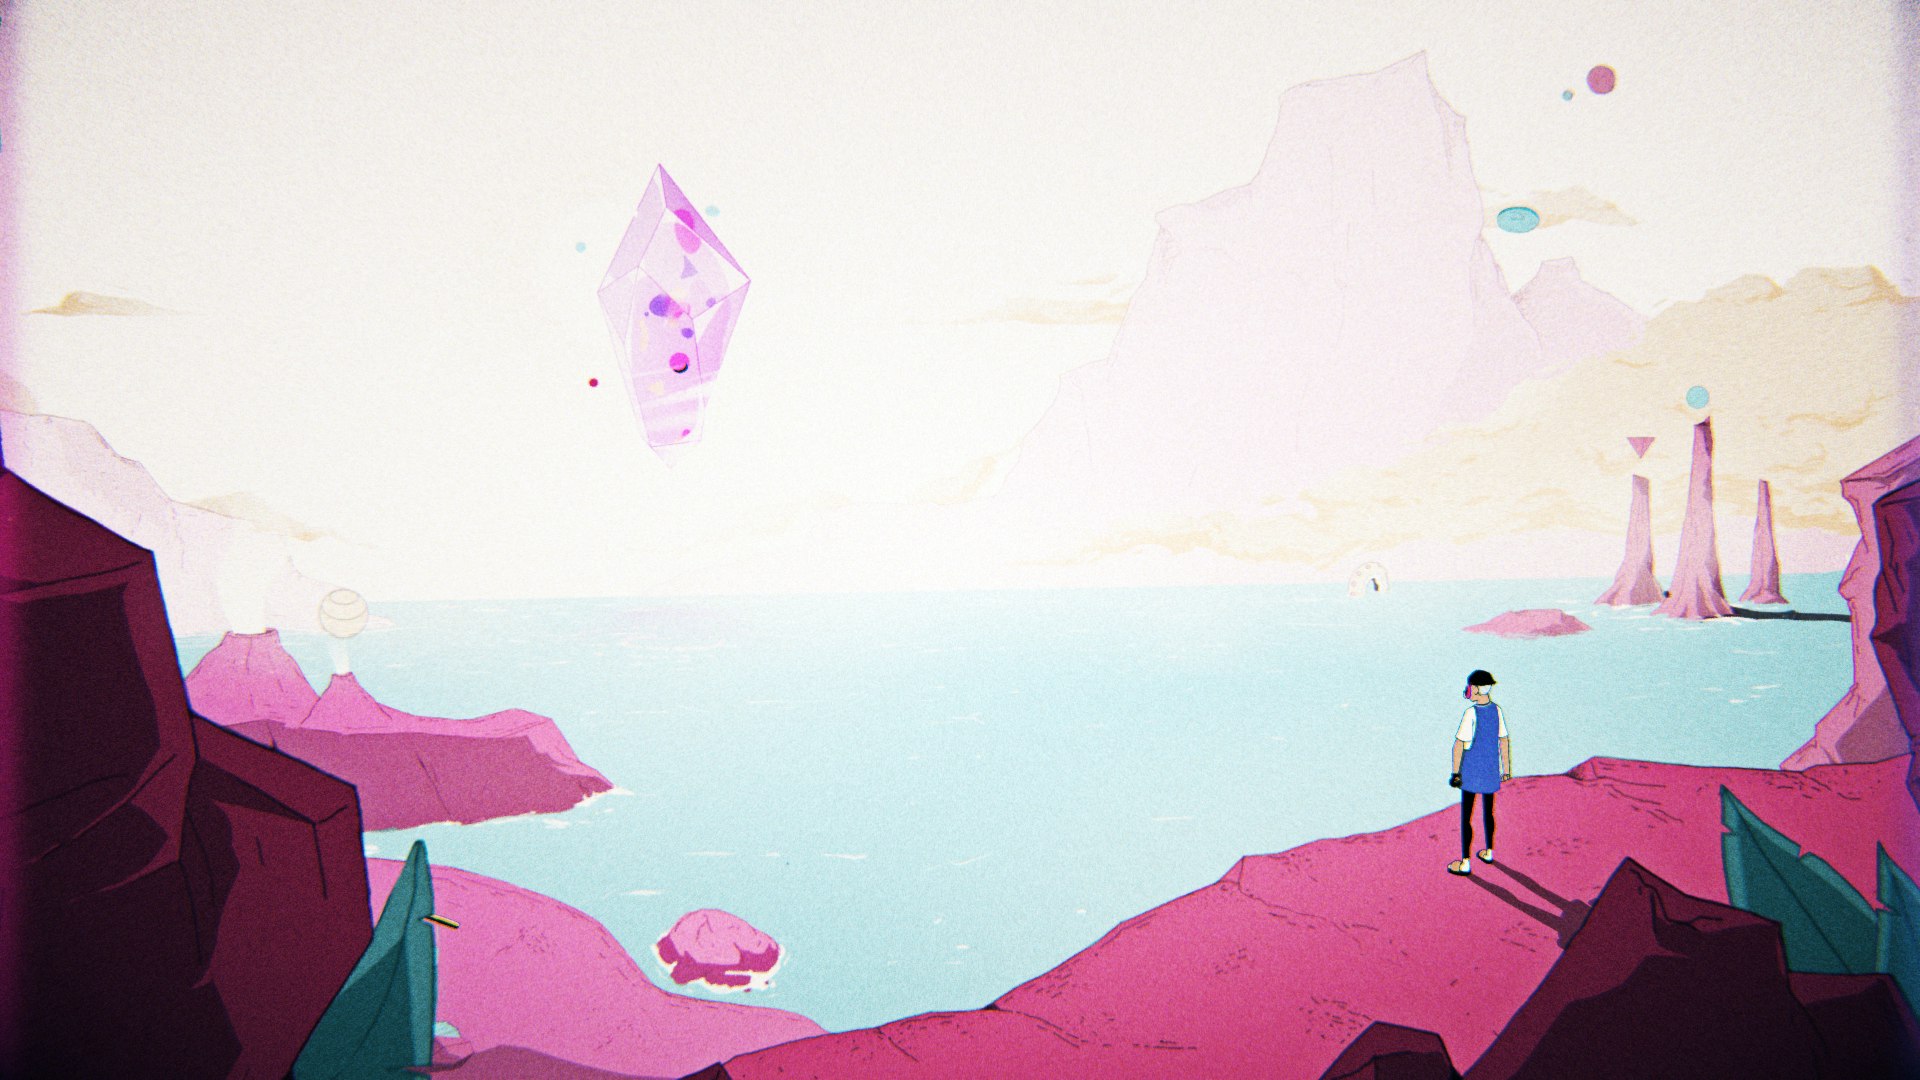 Illustration of a surrealist landscape with a levitating diamond